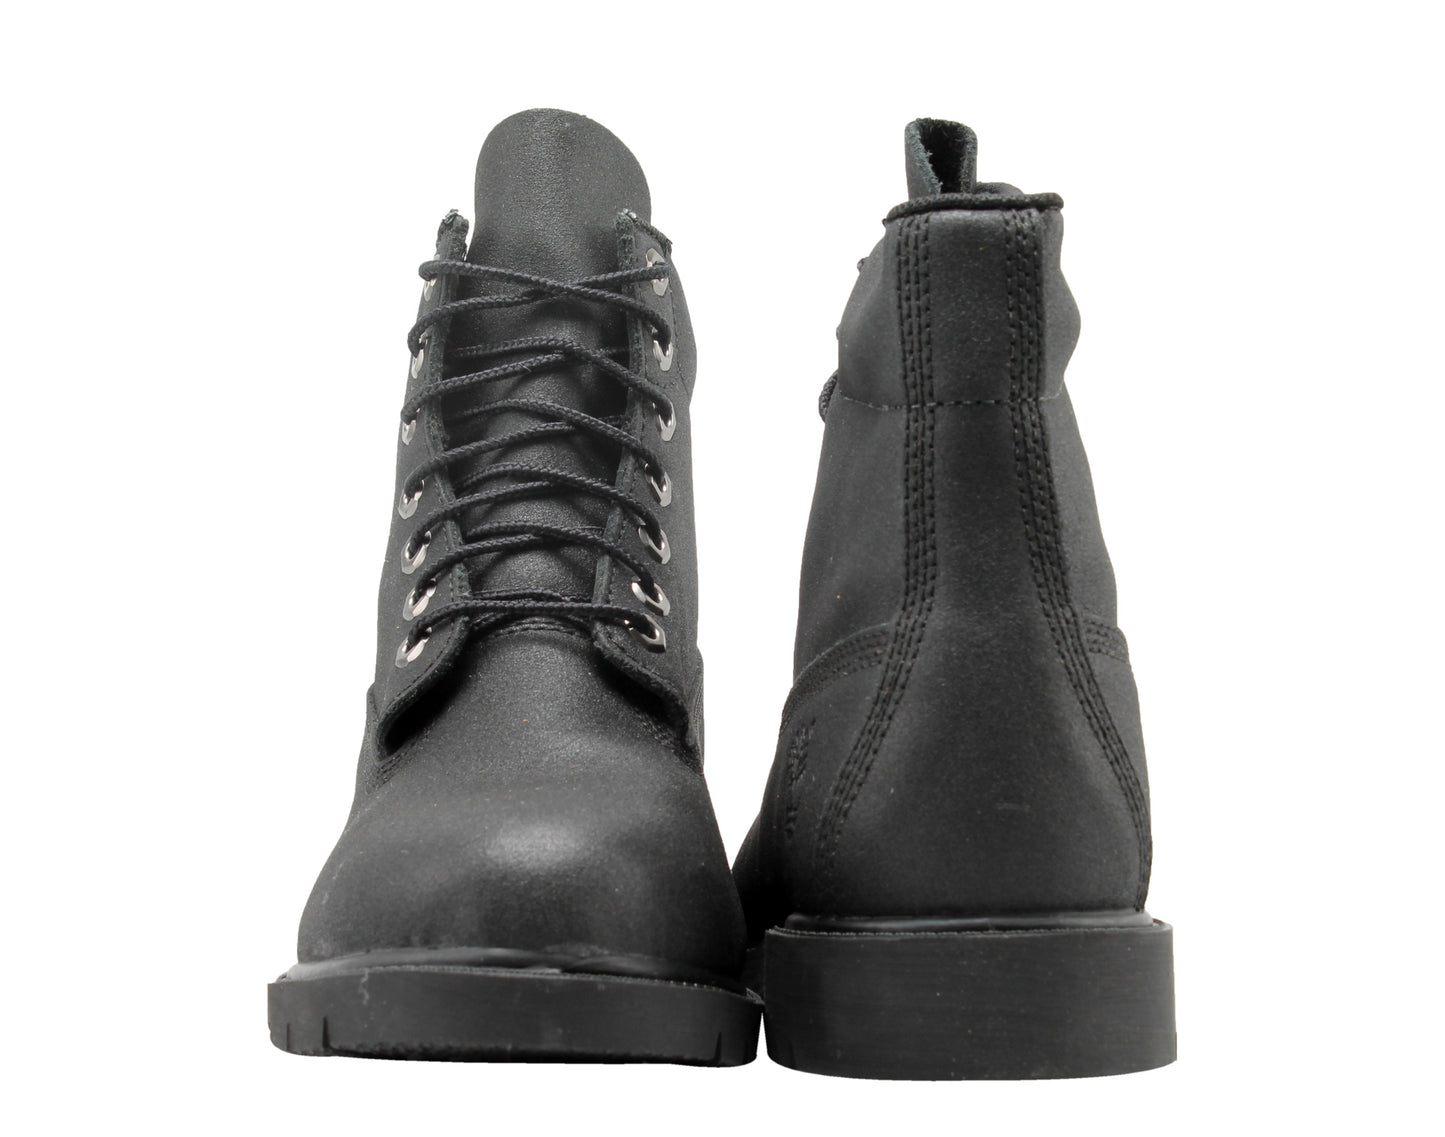 Timberland 6-inch Basic Waterproof Men's Boots